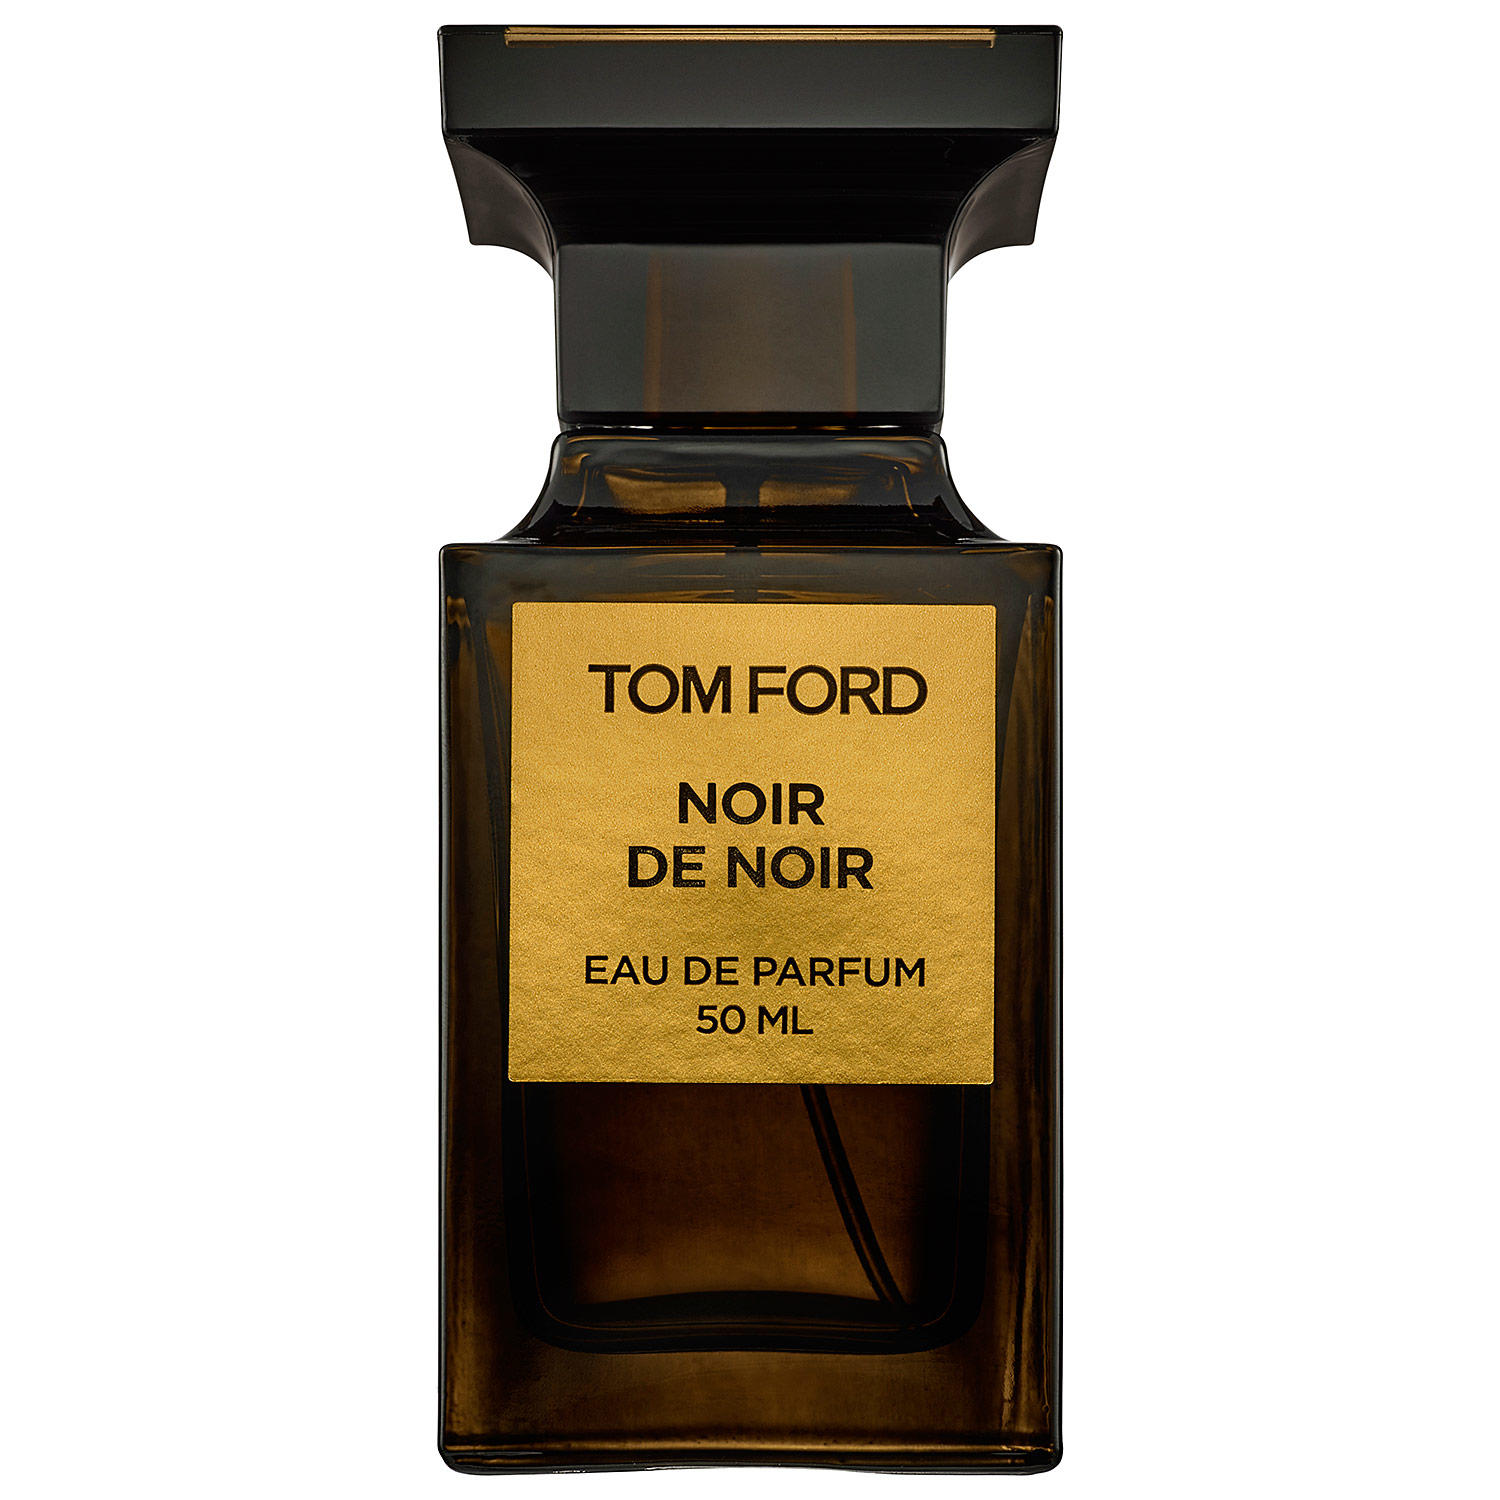 TOM FORD Noir de Noir